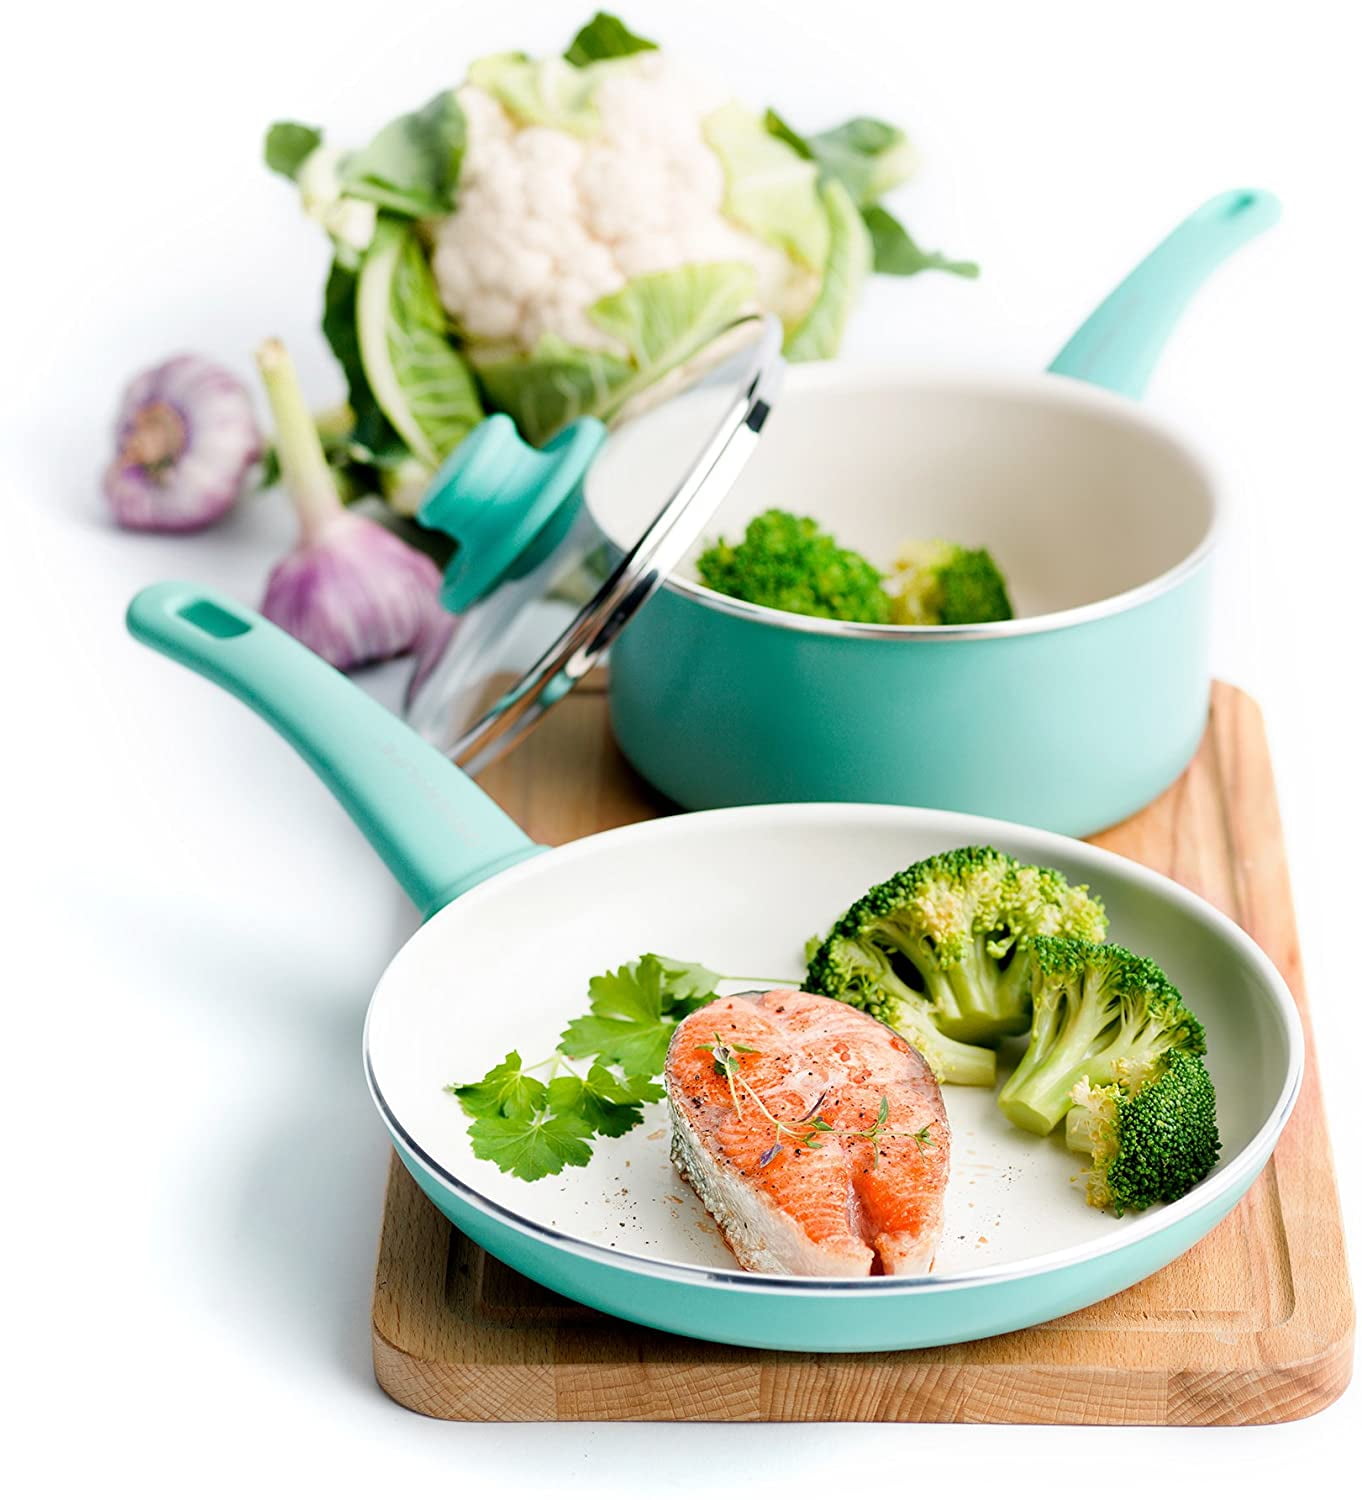 GreenLife Soft Grip Ceramic Nonstick Cookware Set - Turquoise, 13 pc - QFC